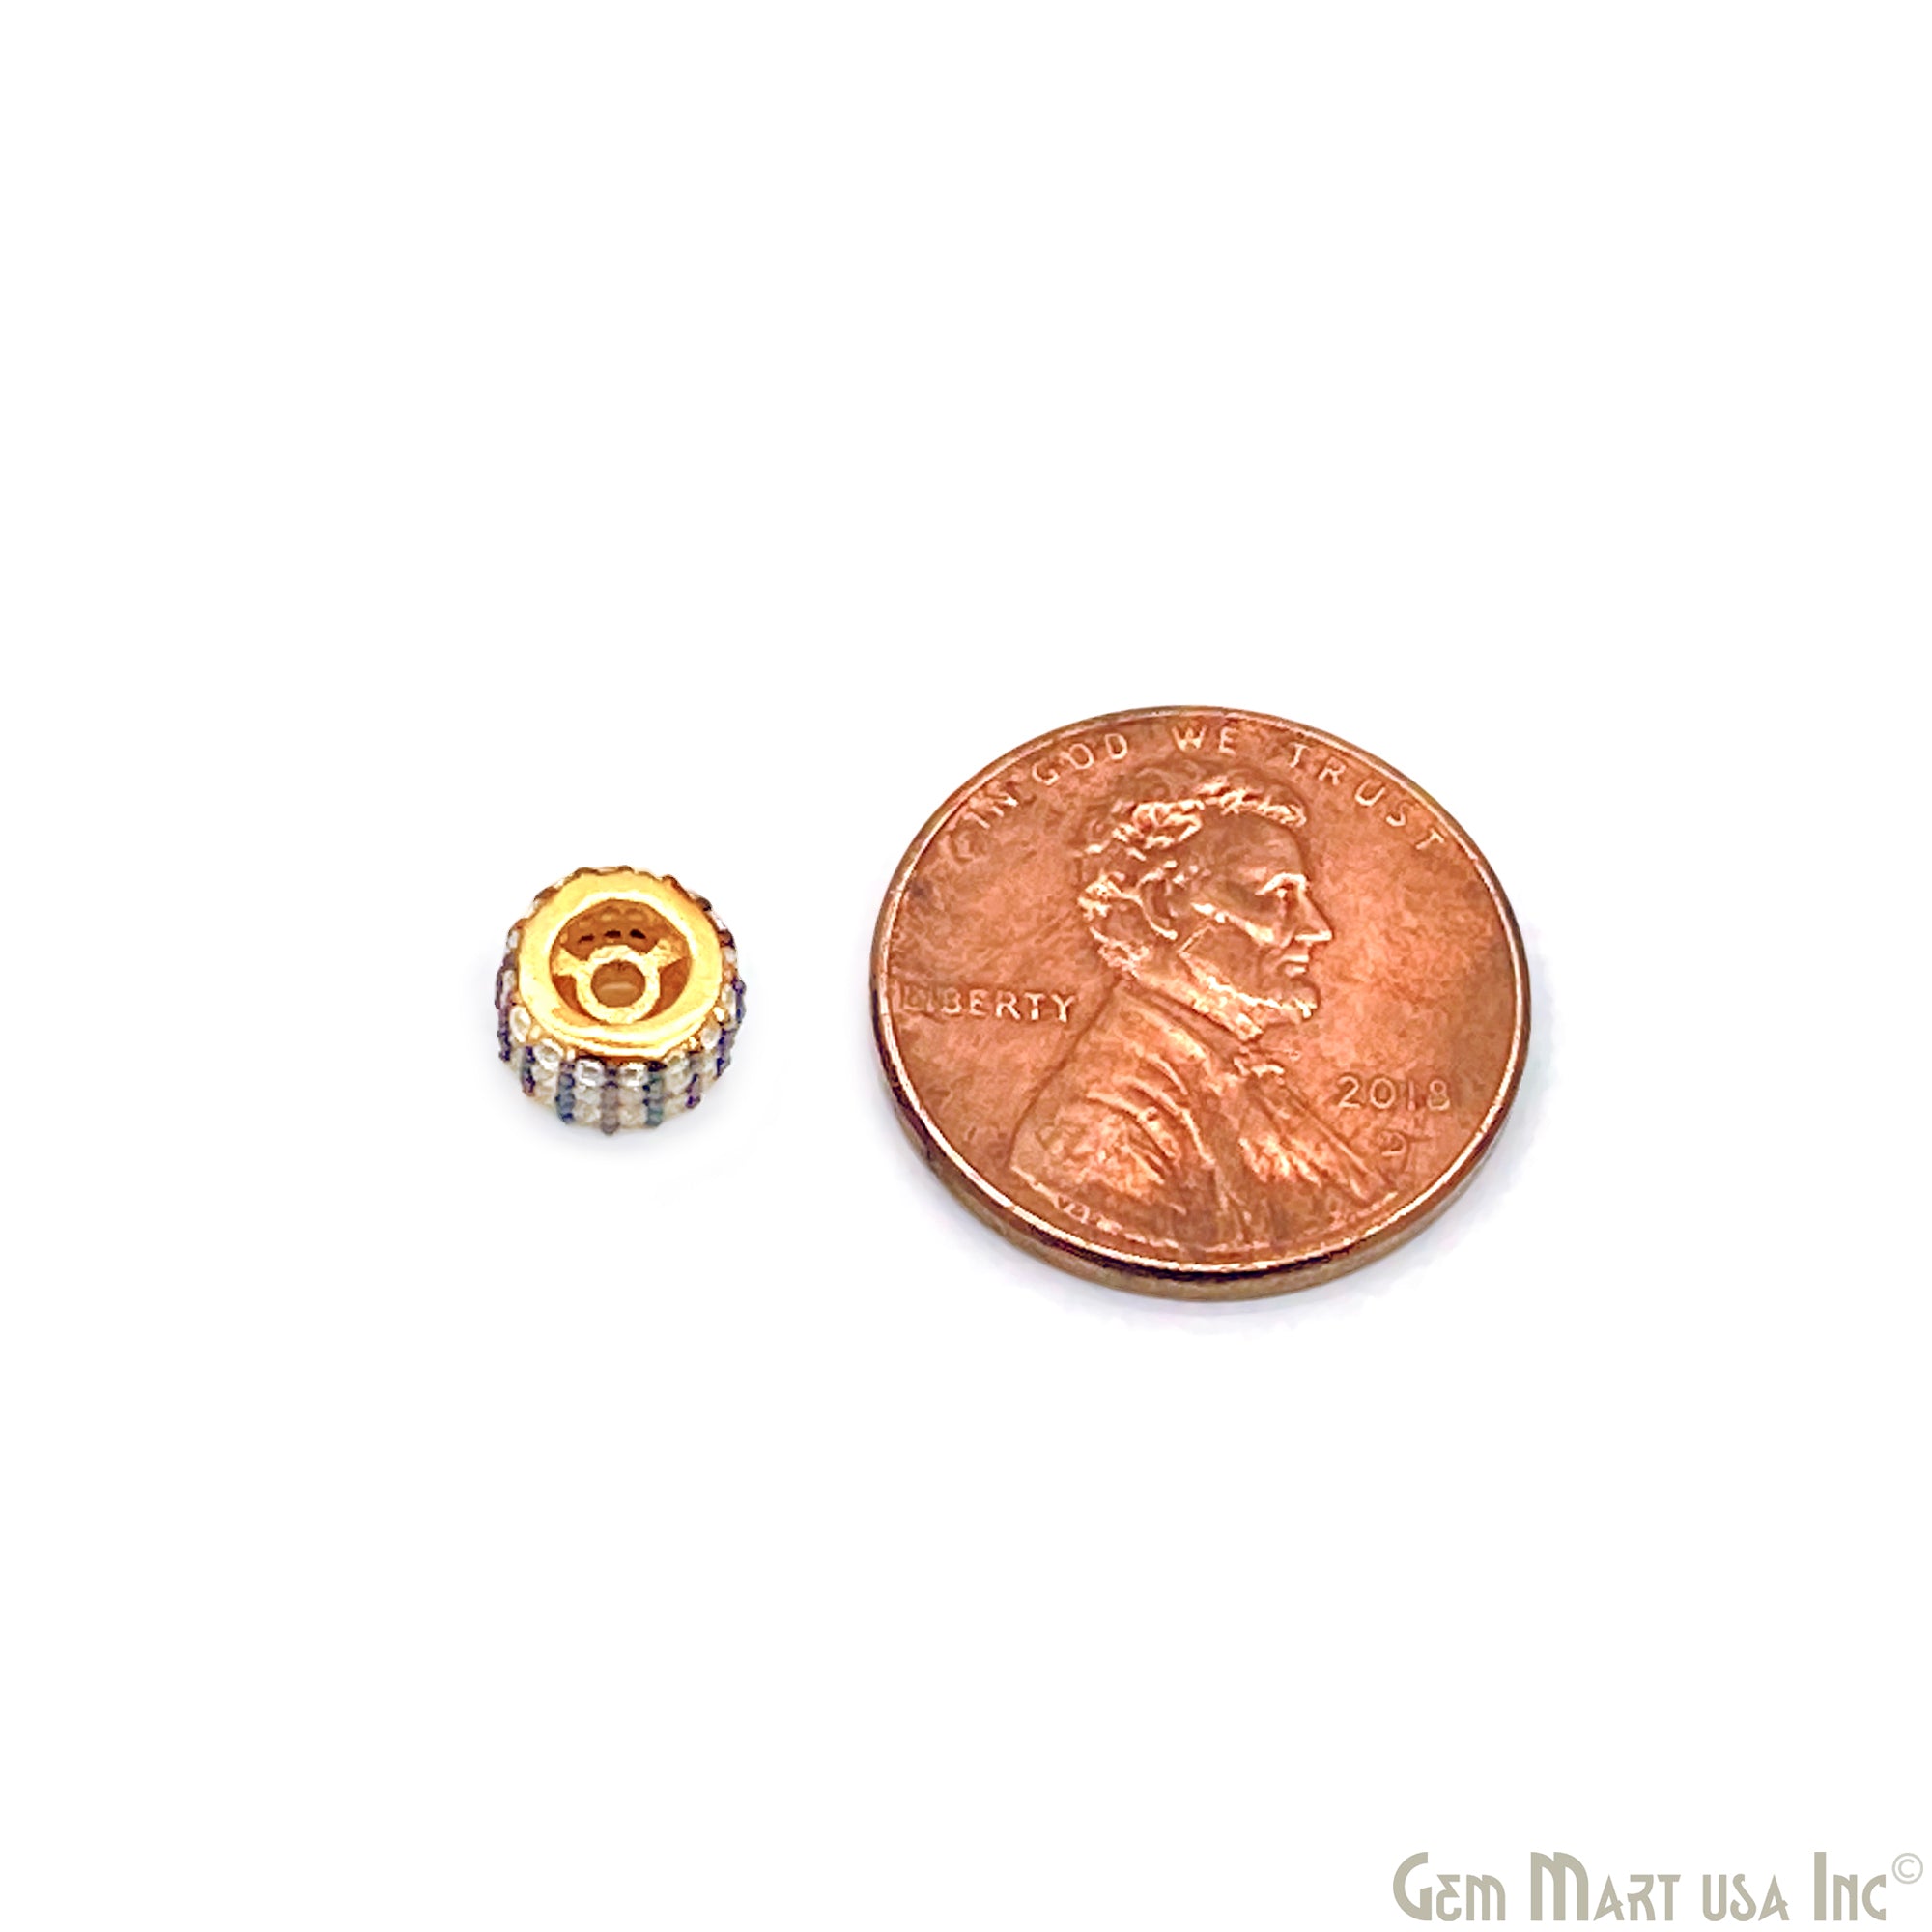 Cubic Zircon Pave 'Round' Shape Charm in Gold Vermeil 8mm Pendant Connector